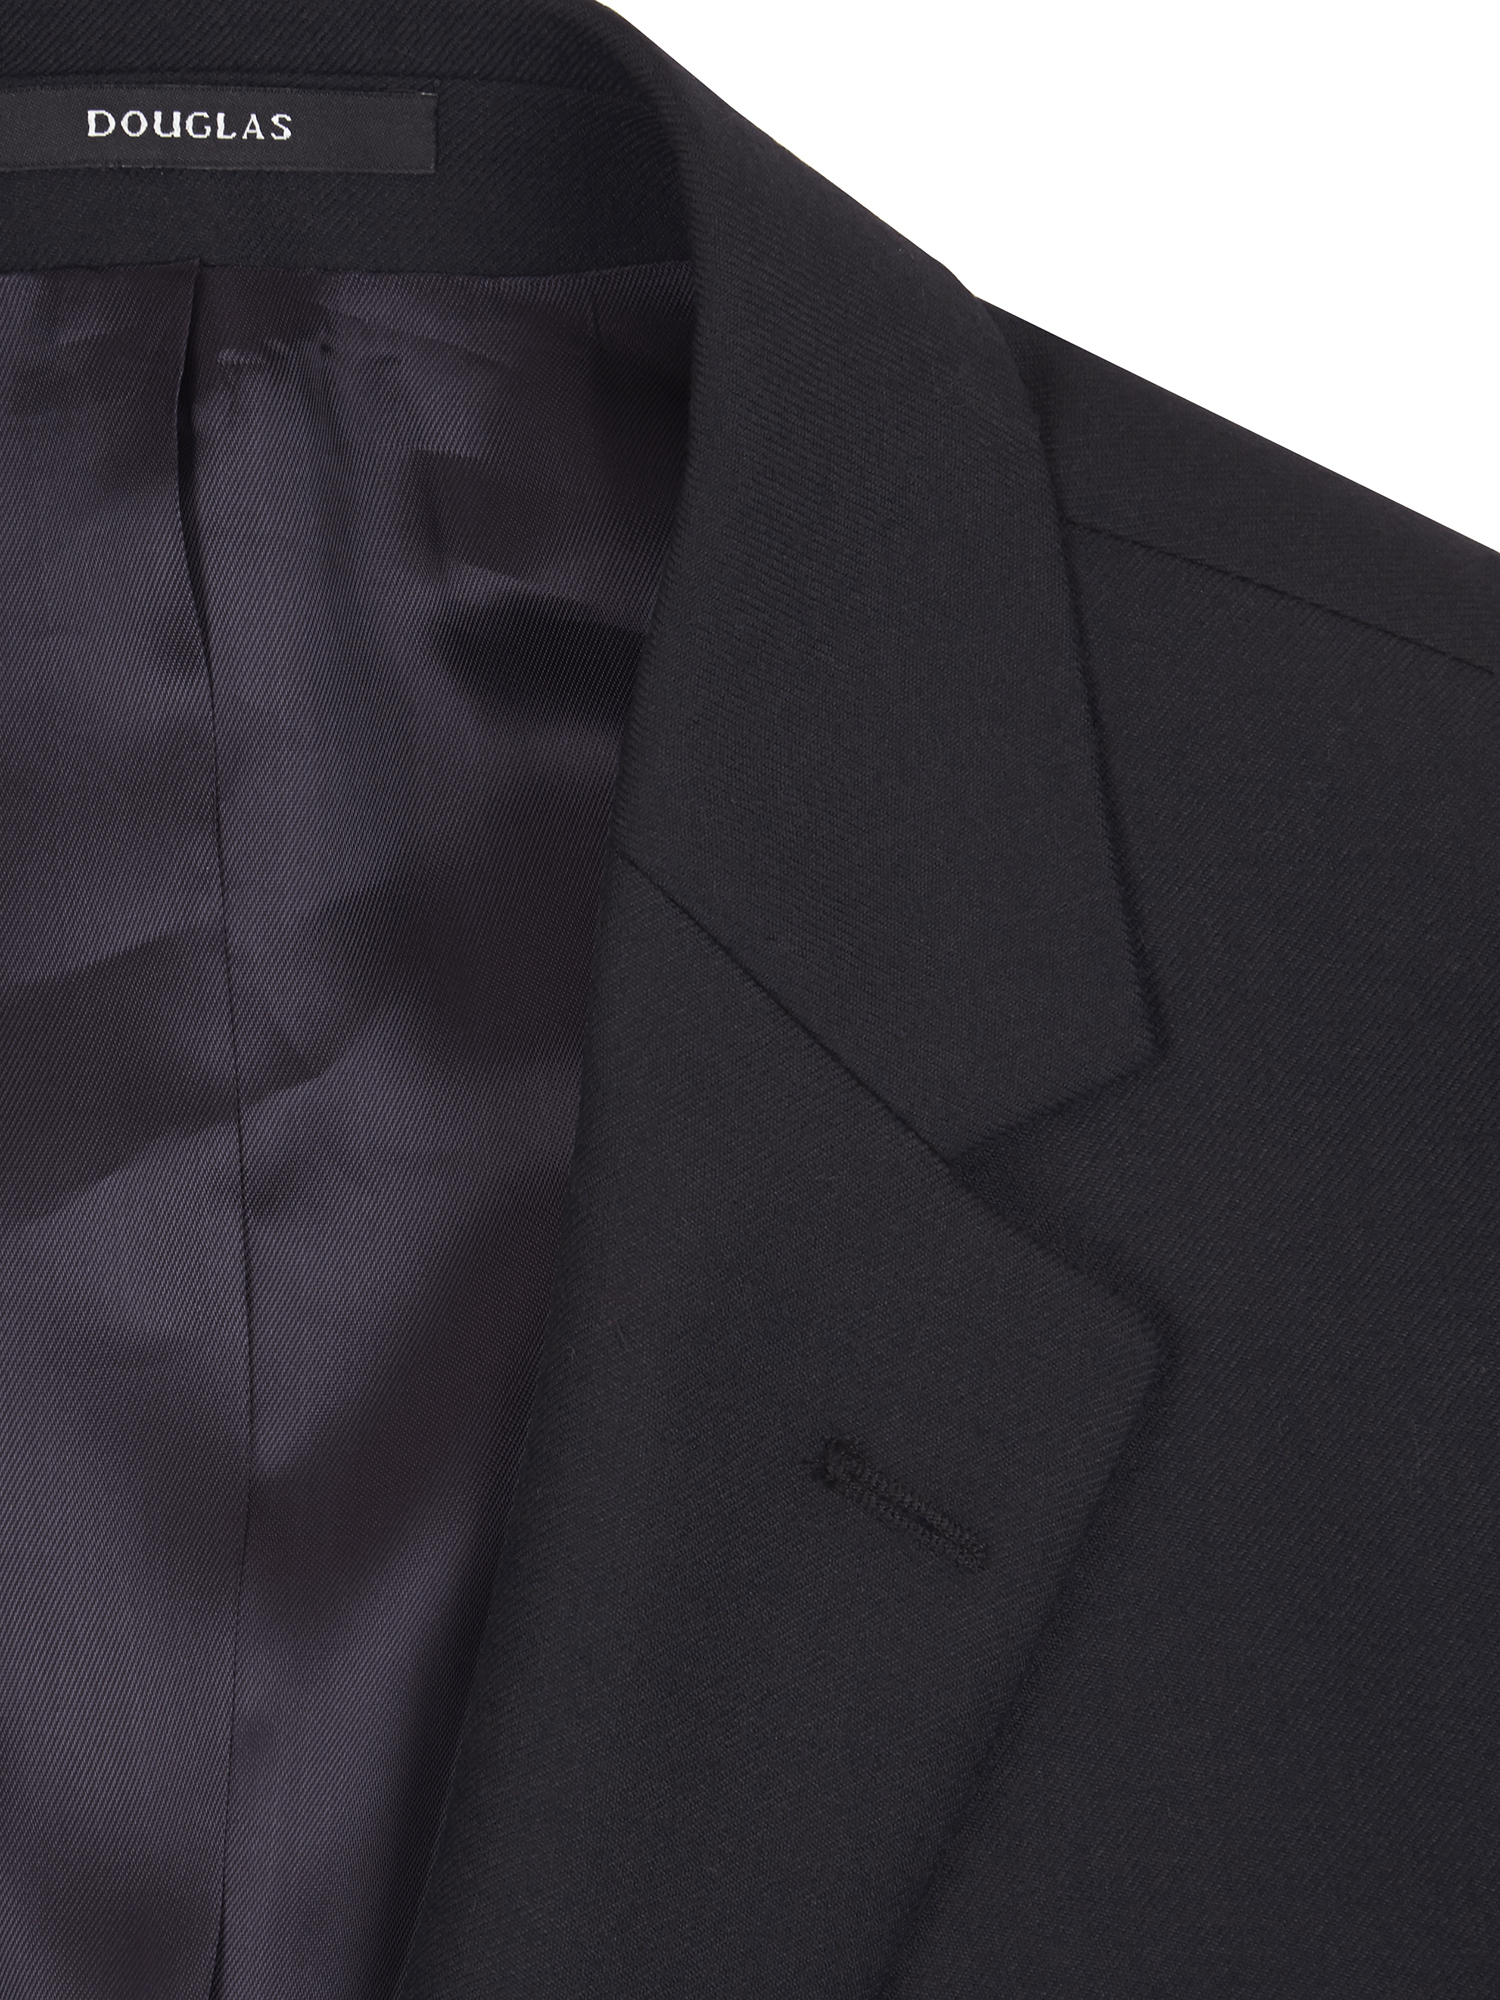 Jackets / Blazers - Tom Murphy's Formal and Menswear